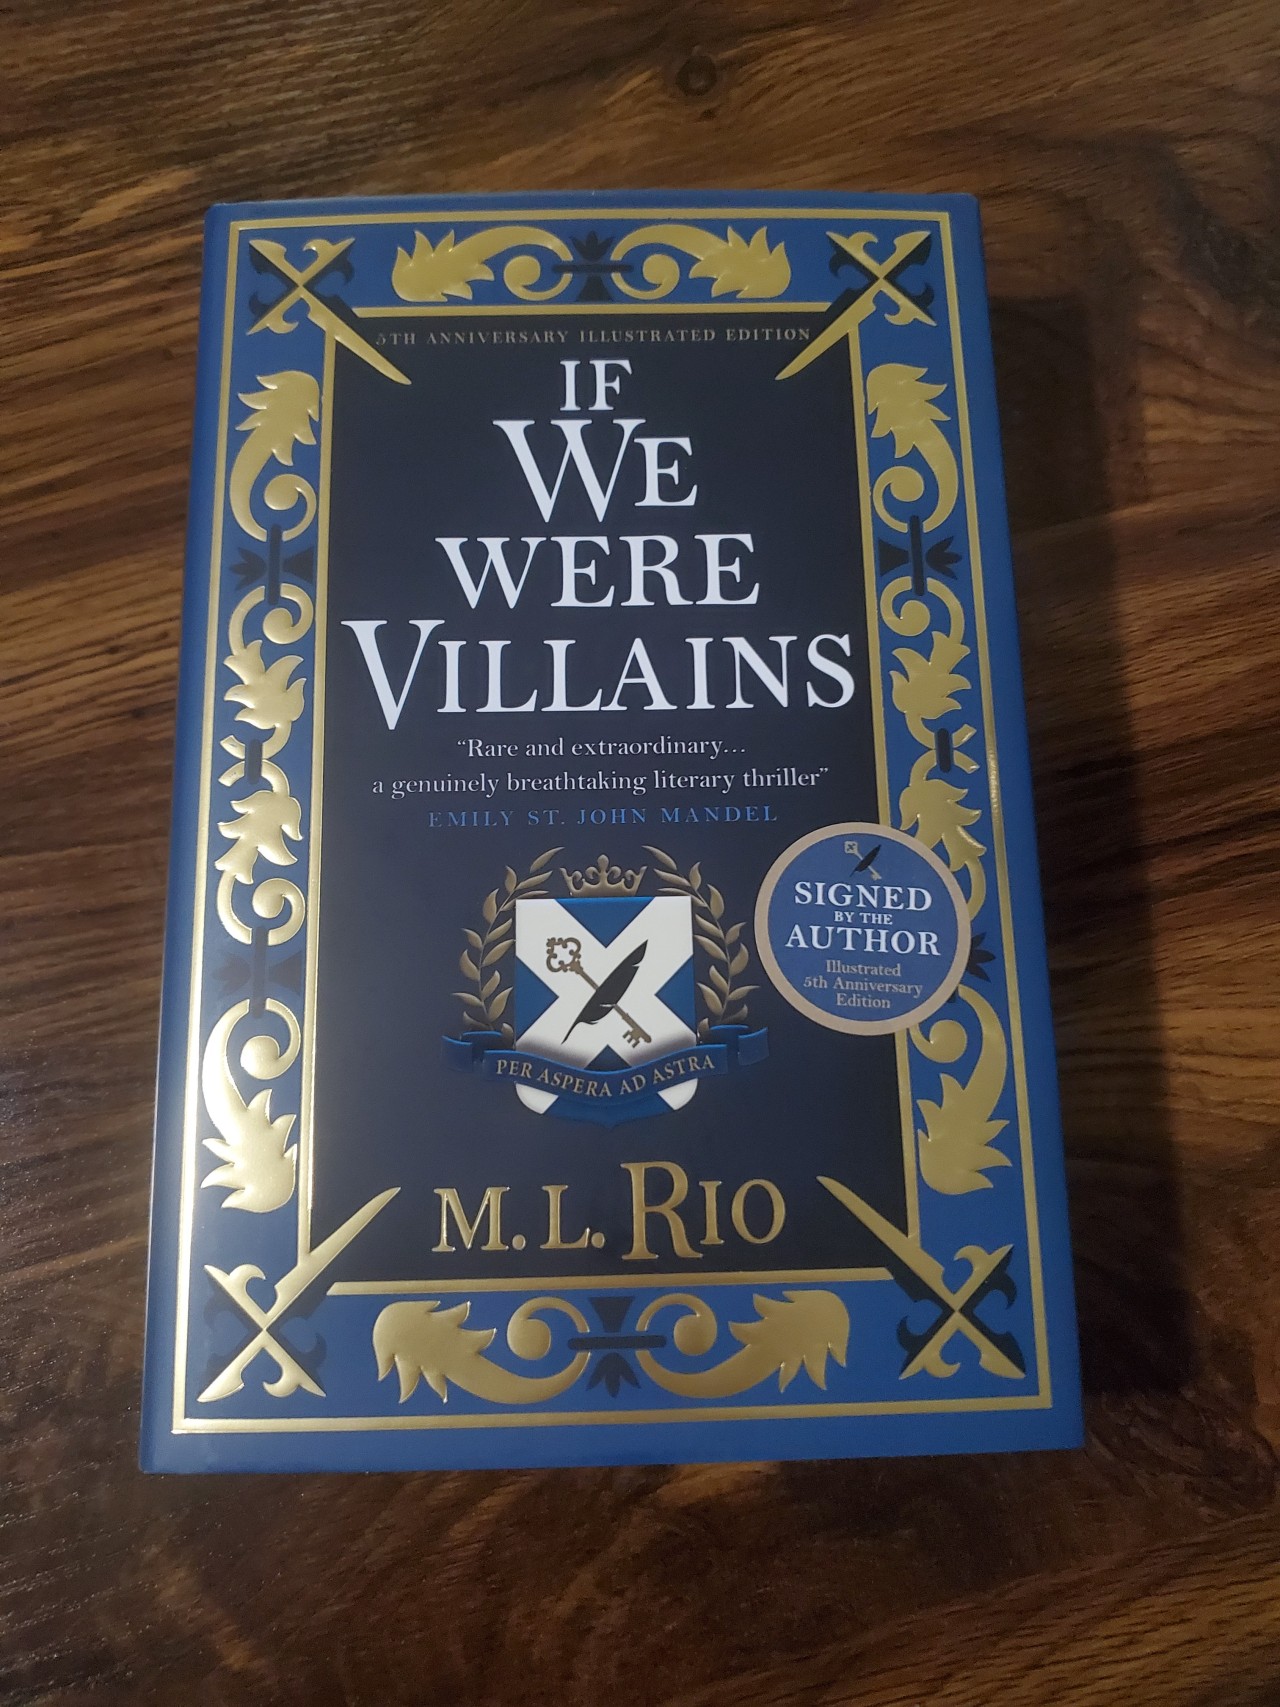 If We Were Villains by M. L. Rio - Ebook